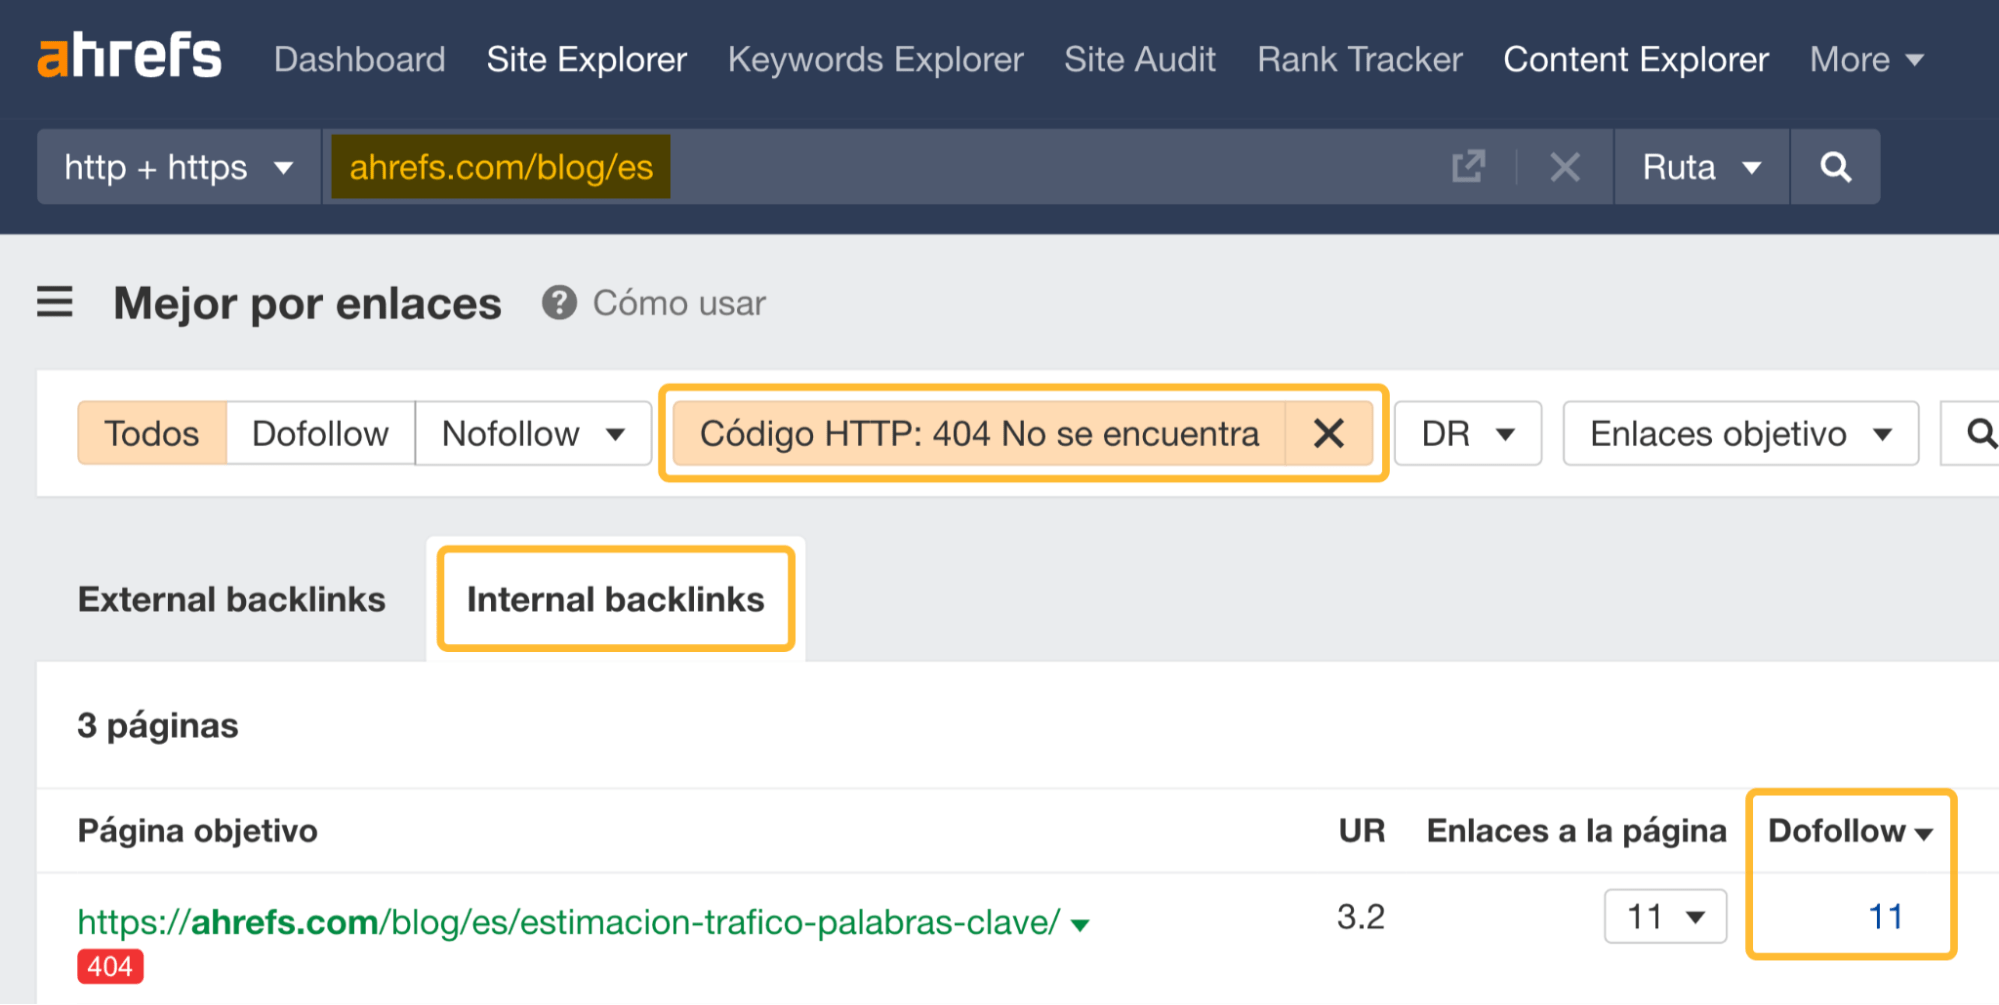 Filtrando códigos HTTP 404 ordenados por "dofollow" en el Site Explorer de Ahrefs.